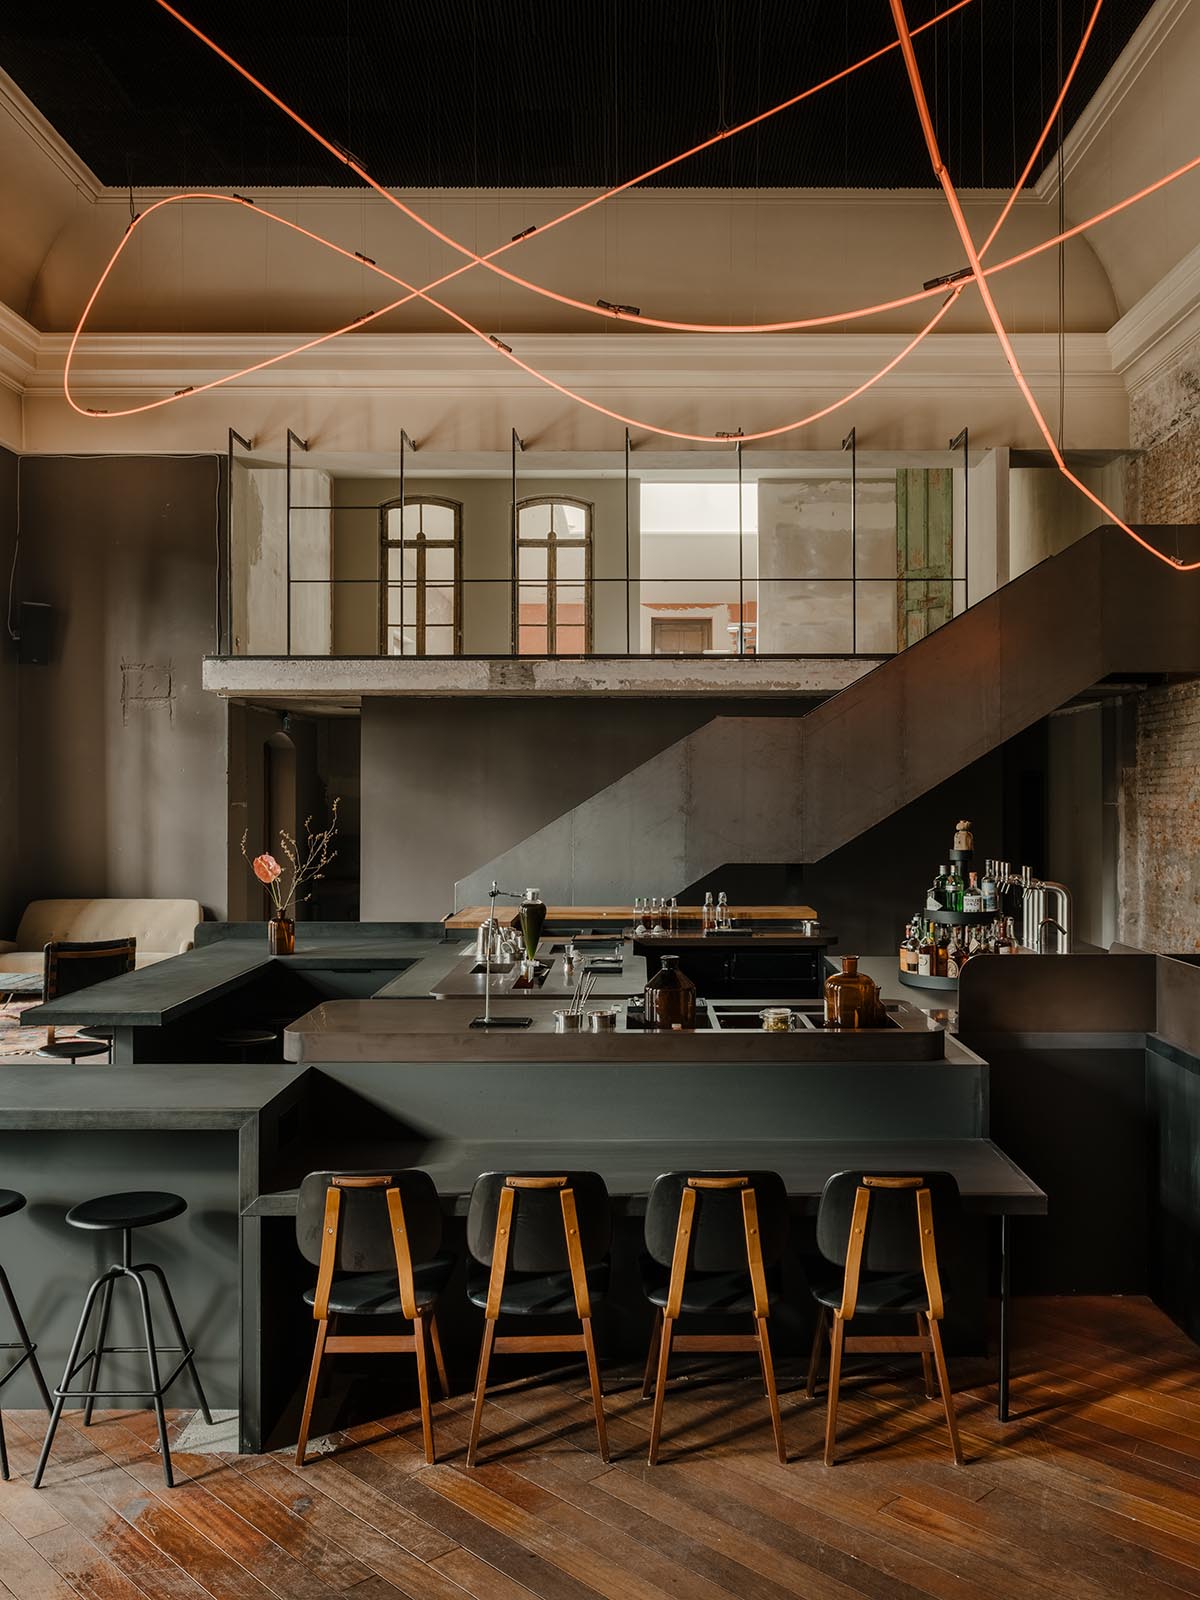 KINK Restaurant, featuring bold and dark interiors, opens with Kerim  Seiler's neon light installation